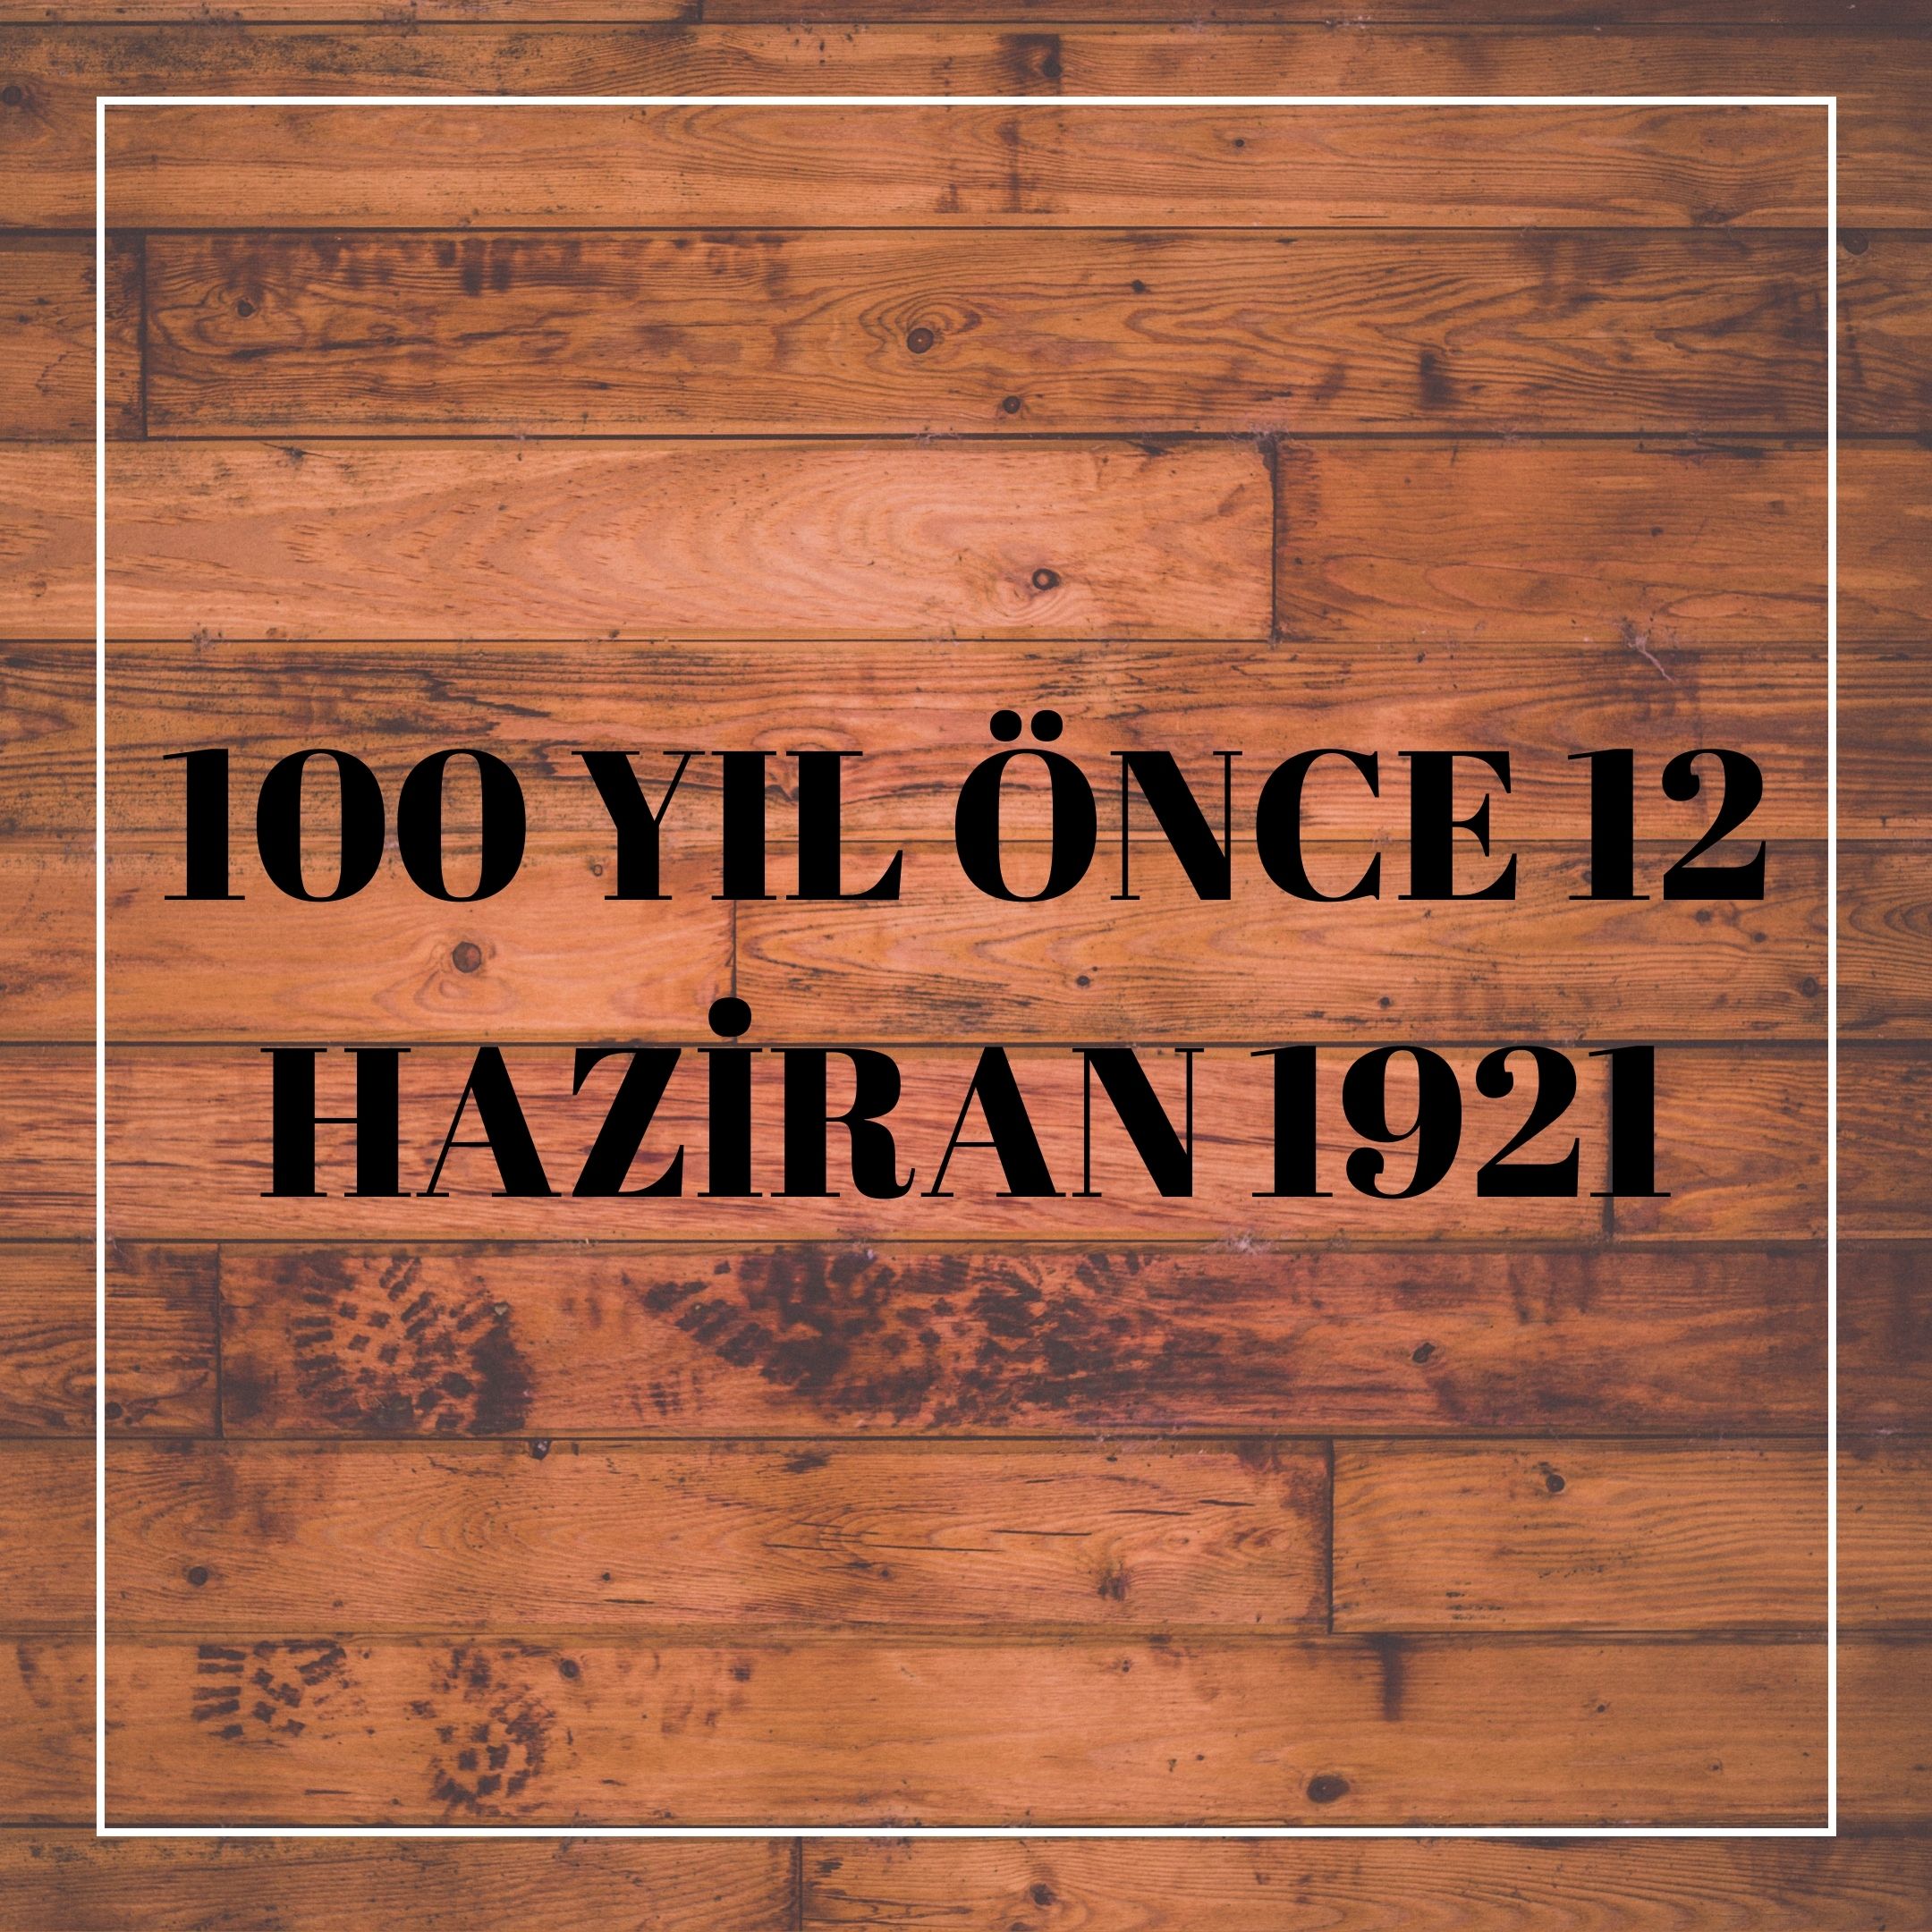 100 YIL ÖNCE 12 HAZİRAN 1921